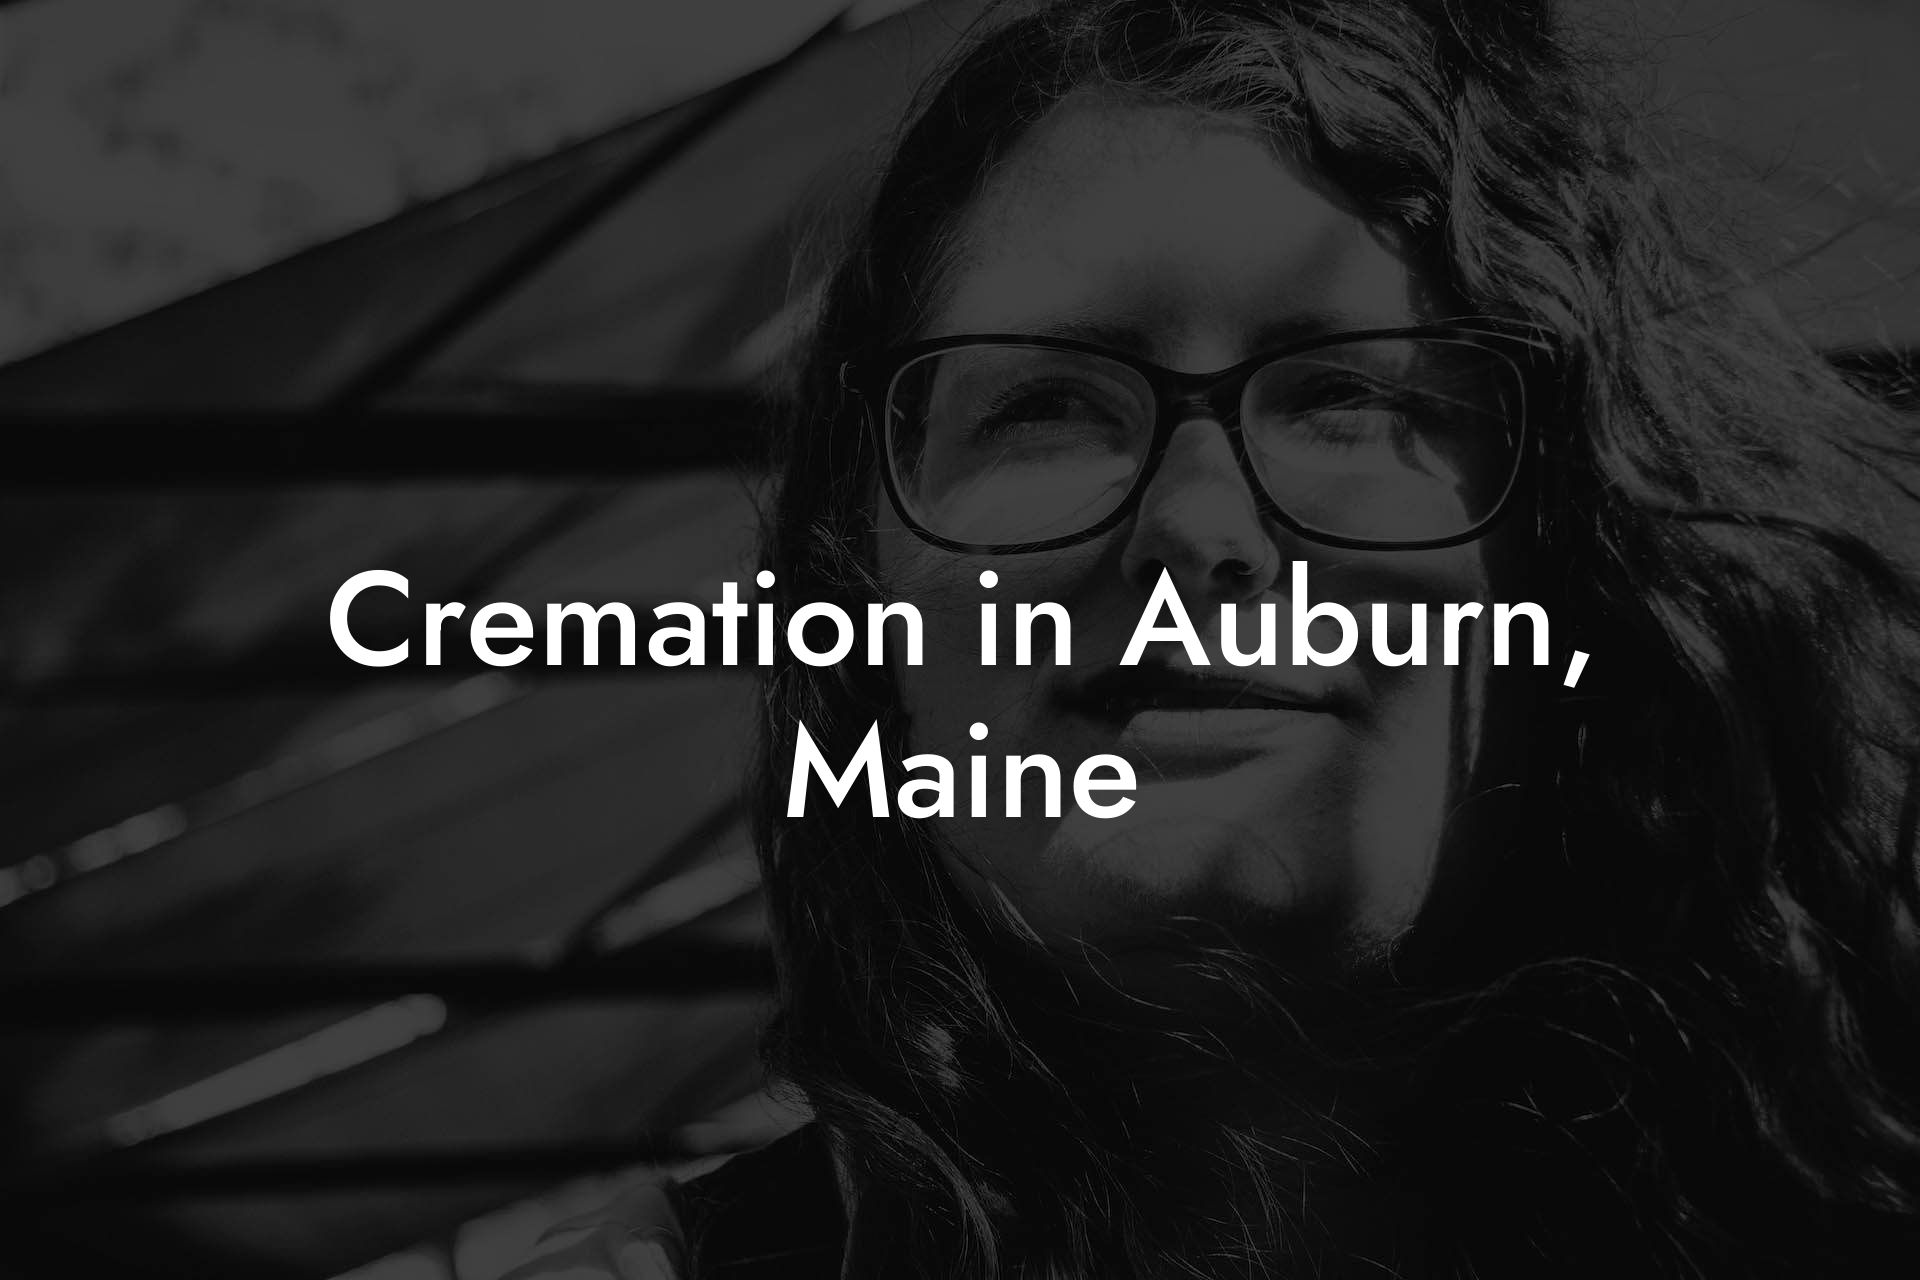 Cremation in Auburn, Maine